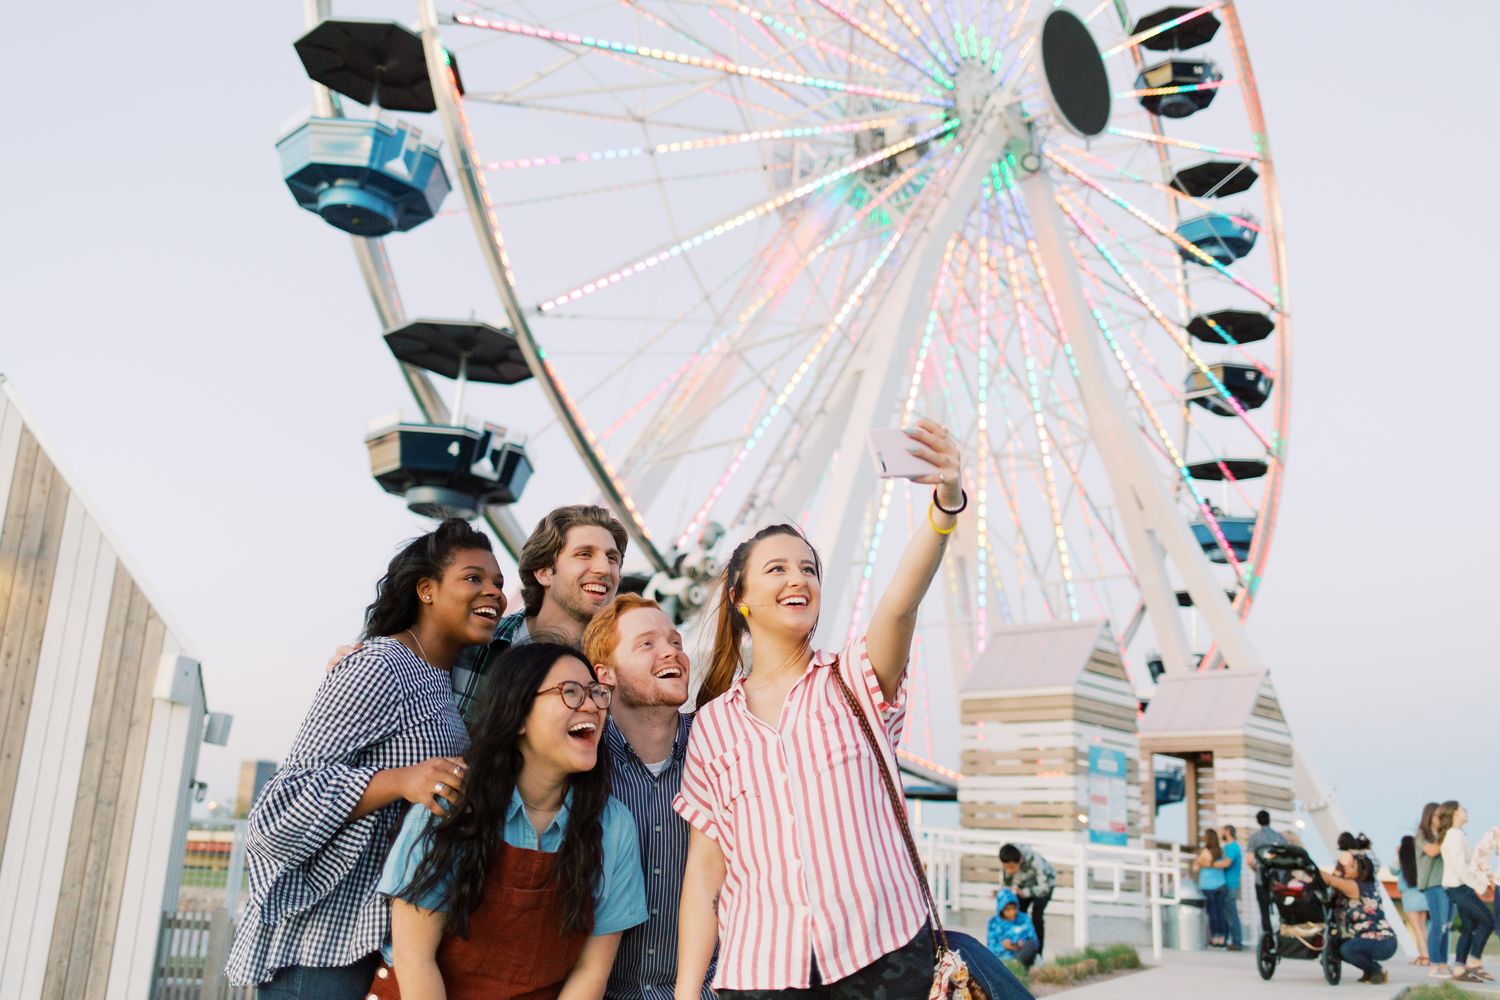 OC students taking a selfie in front of the Wheeler Ferris Wheel